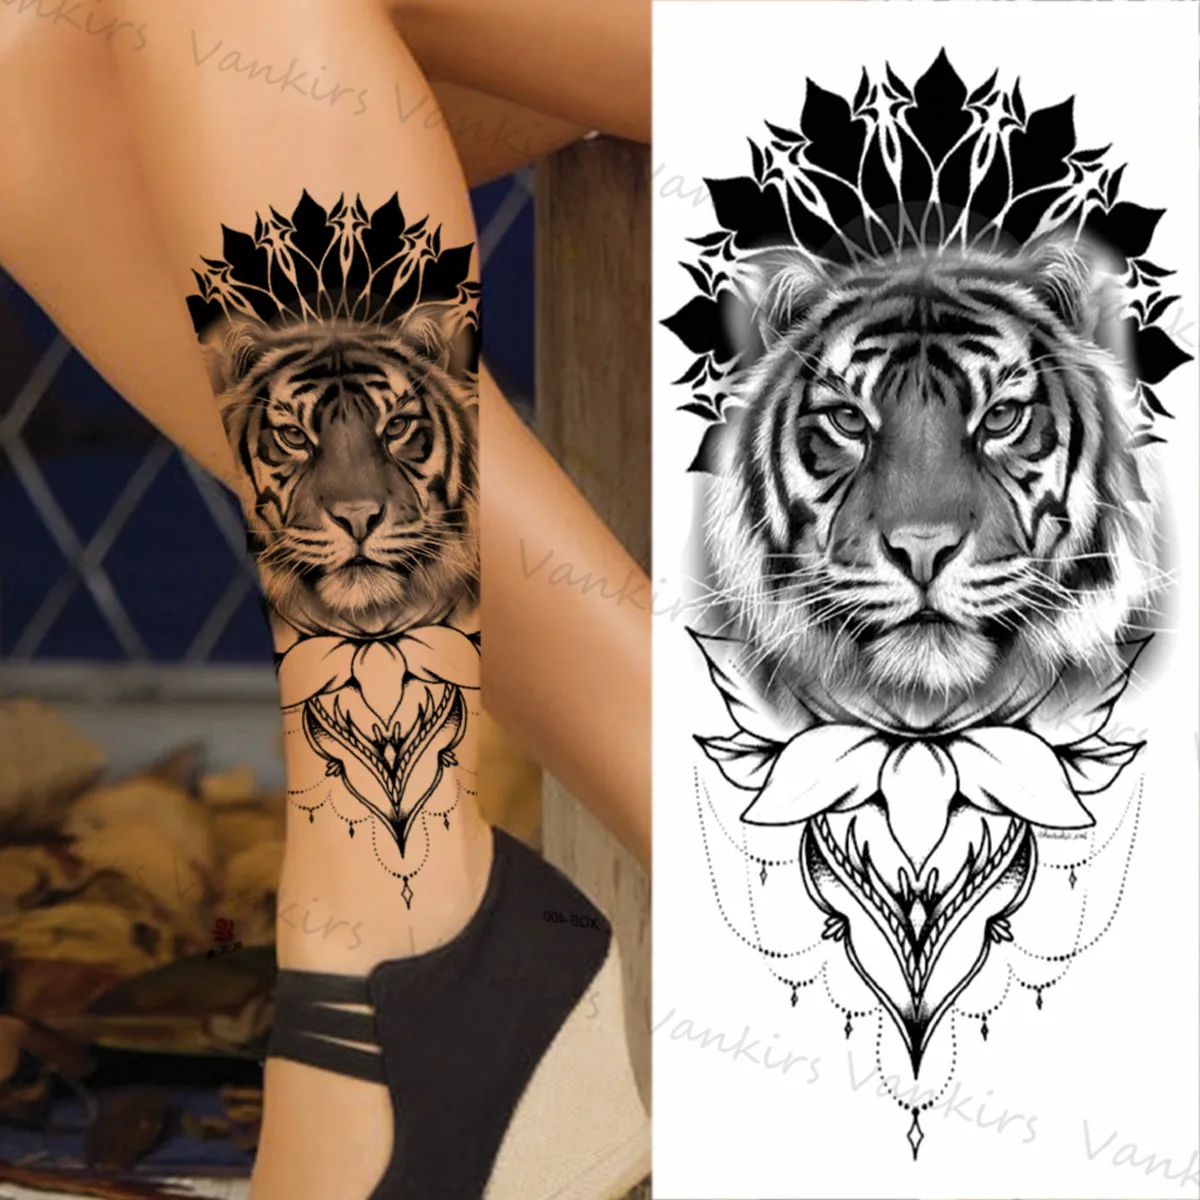 Black Tiger Temporary Tattoos For Women Girls Lion Compass Rose Sun Flower  Fake Tattoo Sticker Waterproof Tatoos Leg Arm Sexy|Temporary Tattoos| -  AliExpress